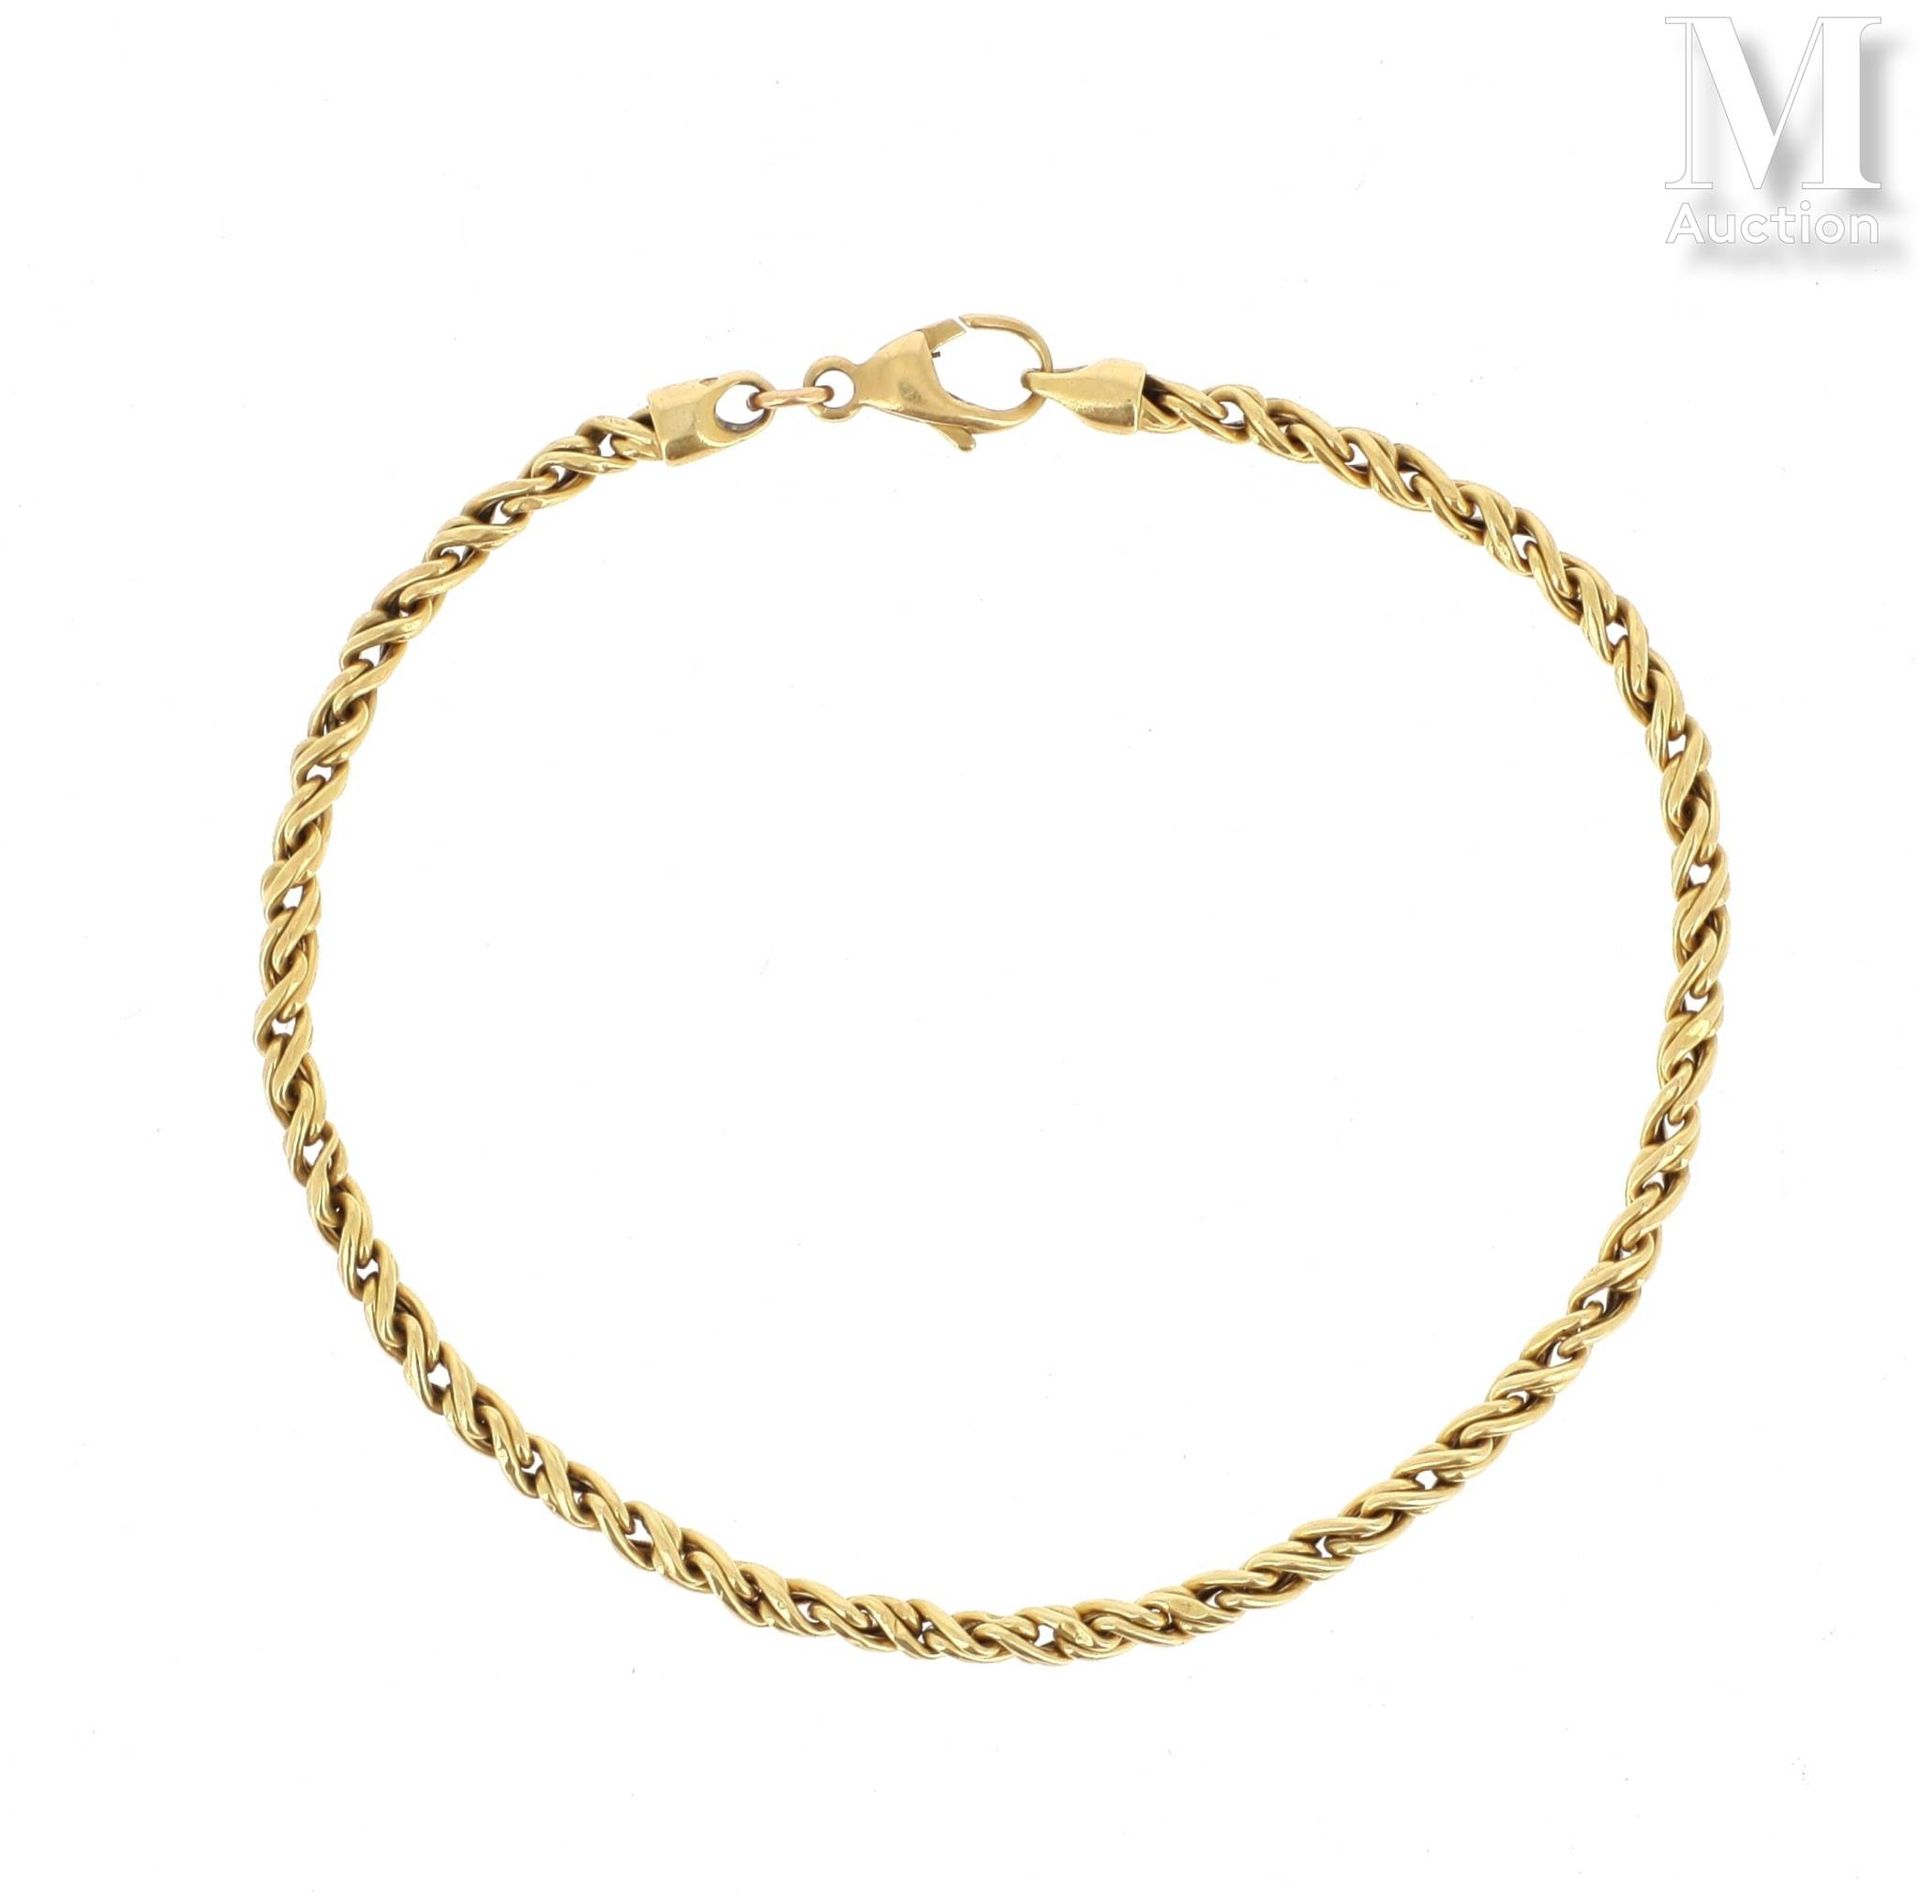 Bracelet 18K黄金(750°/°)扭结网状手镯。

毛重：3,6克。

长：19厘米